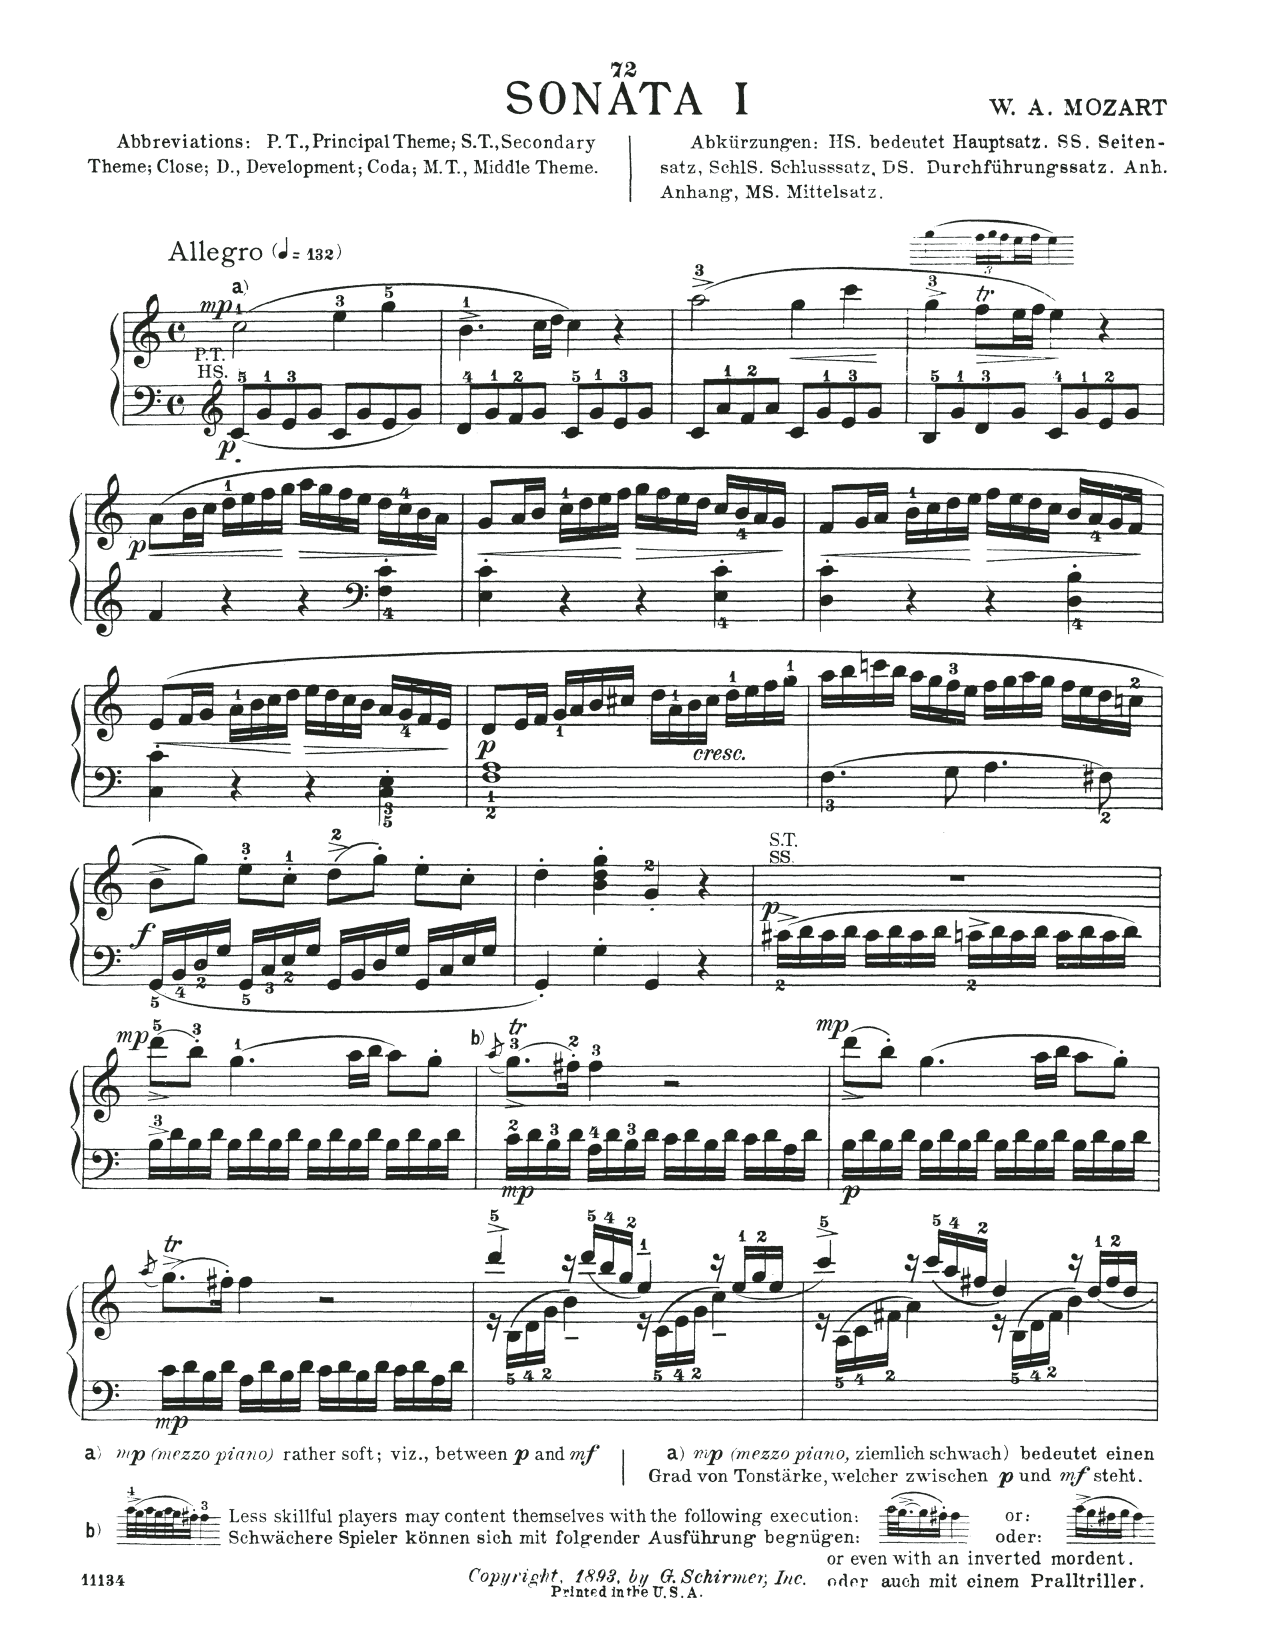 Franz Joseph Haydn Sonata In C Major, Hob. XVI: 35 Sheet Music Notes & Chords for Piano Solo - Download or Print PDF